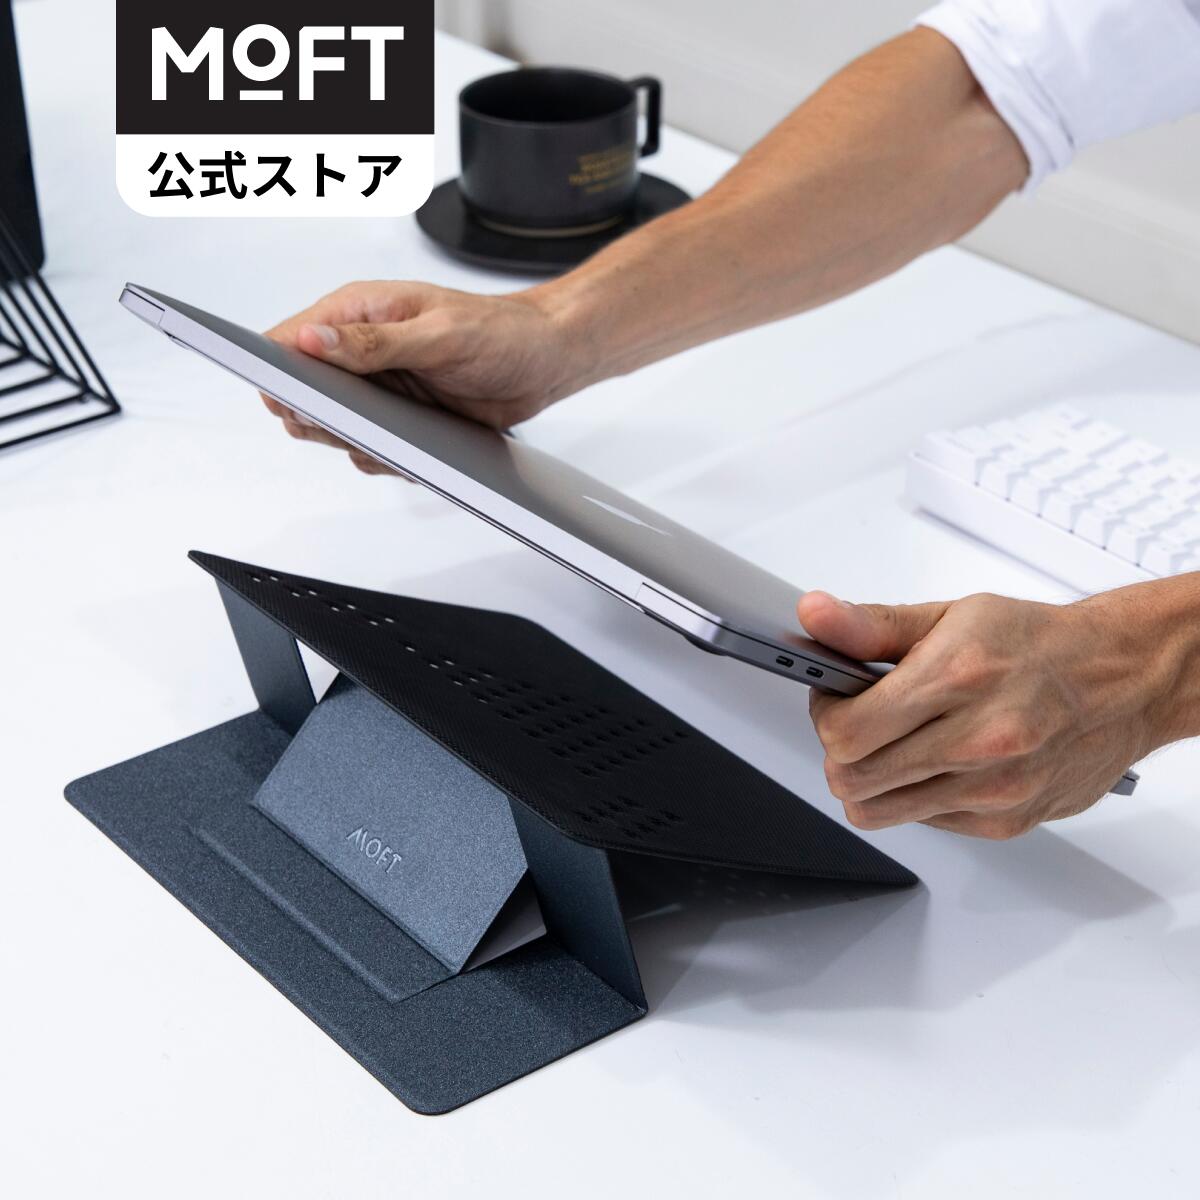 【MOFT公式〜多機種対応】MOFT公式 パソコン スタンド 非粘着タイプ 15° 25° PCスタンド タブレットスタンド 二段階…